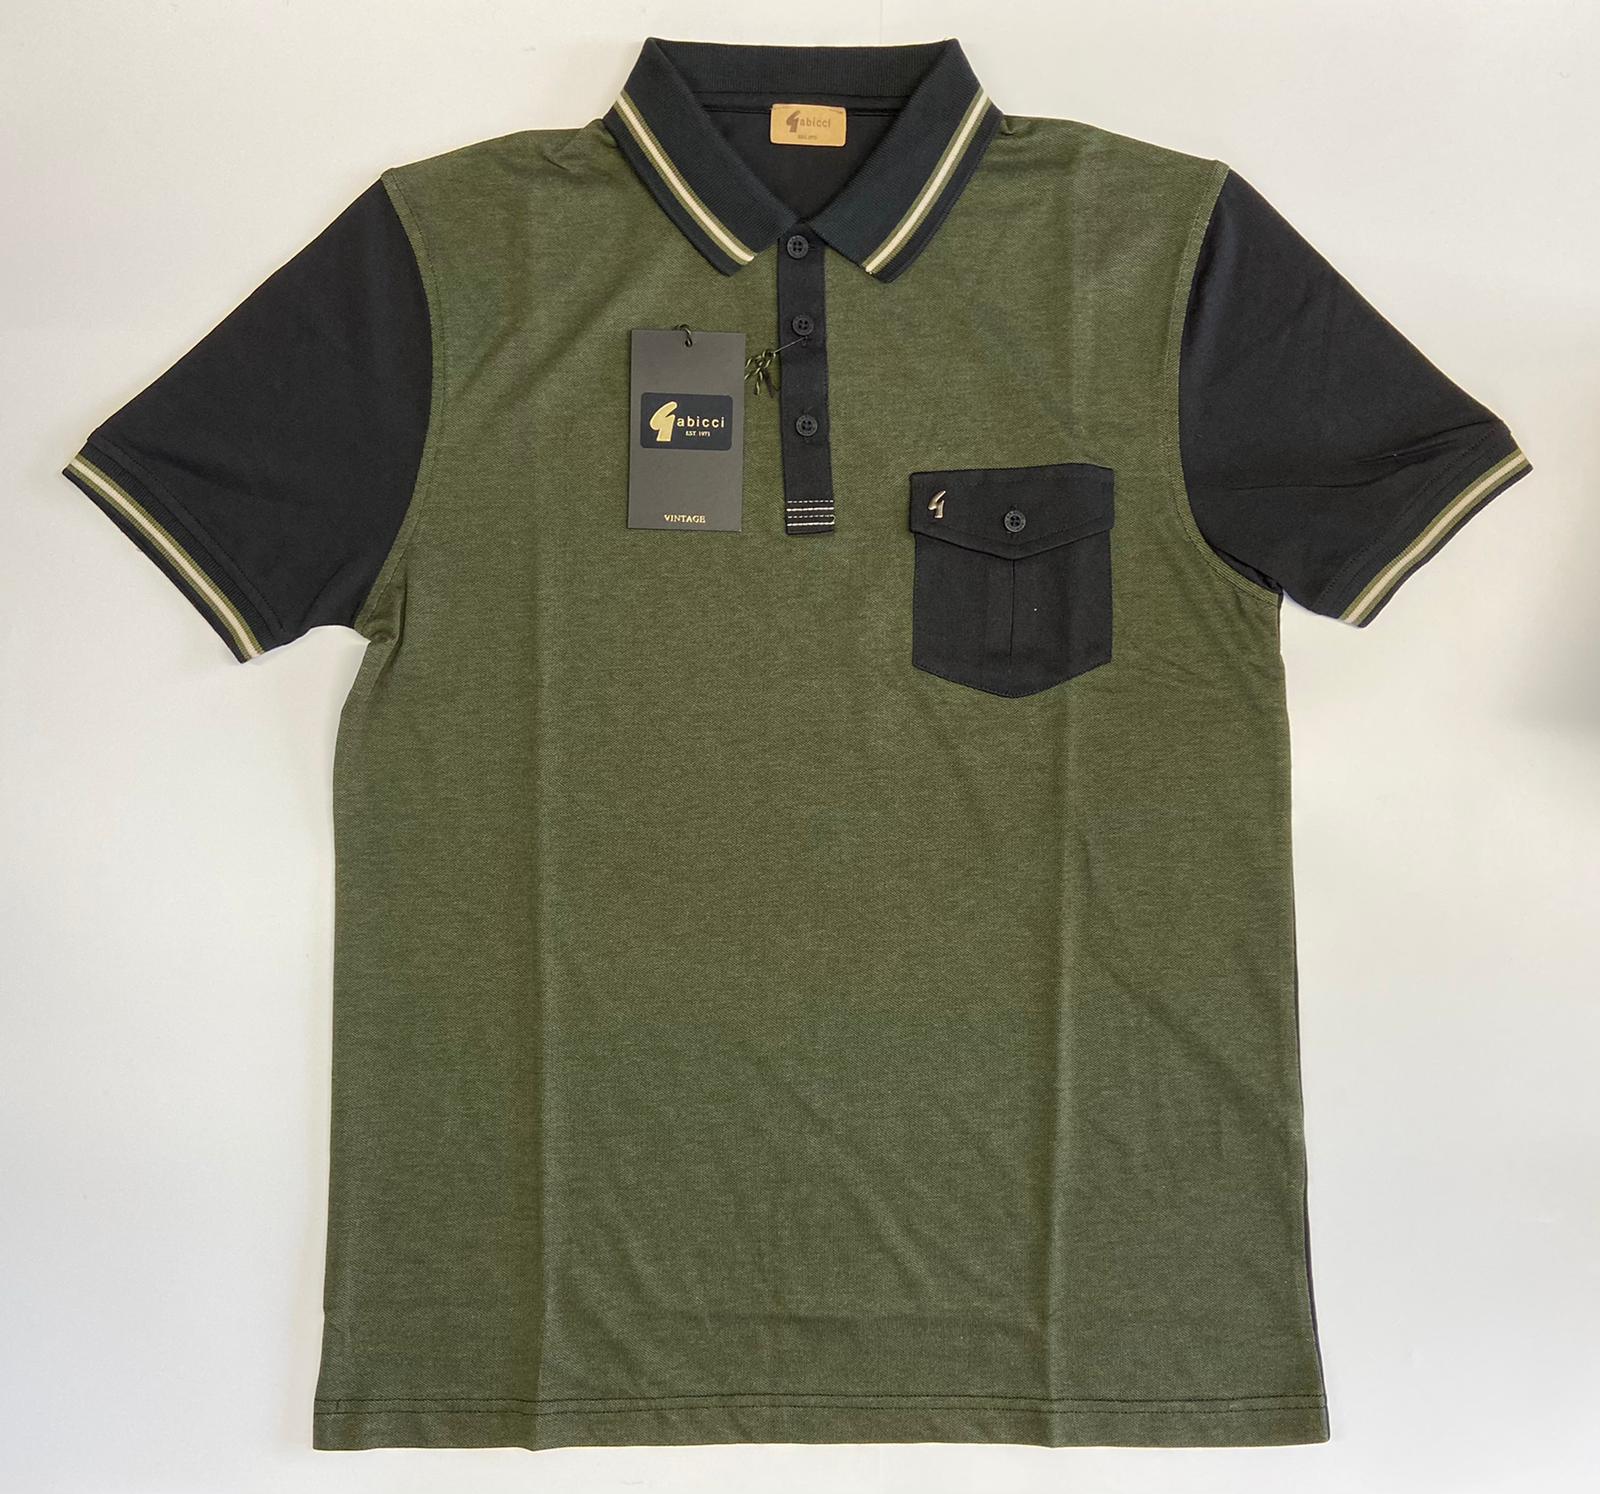 Gabicci Vintage Pocket Polo Shirt - Black/Olive (V45GX06) - The 515